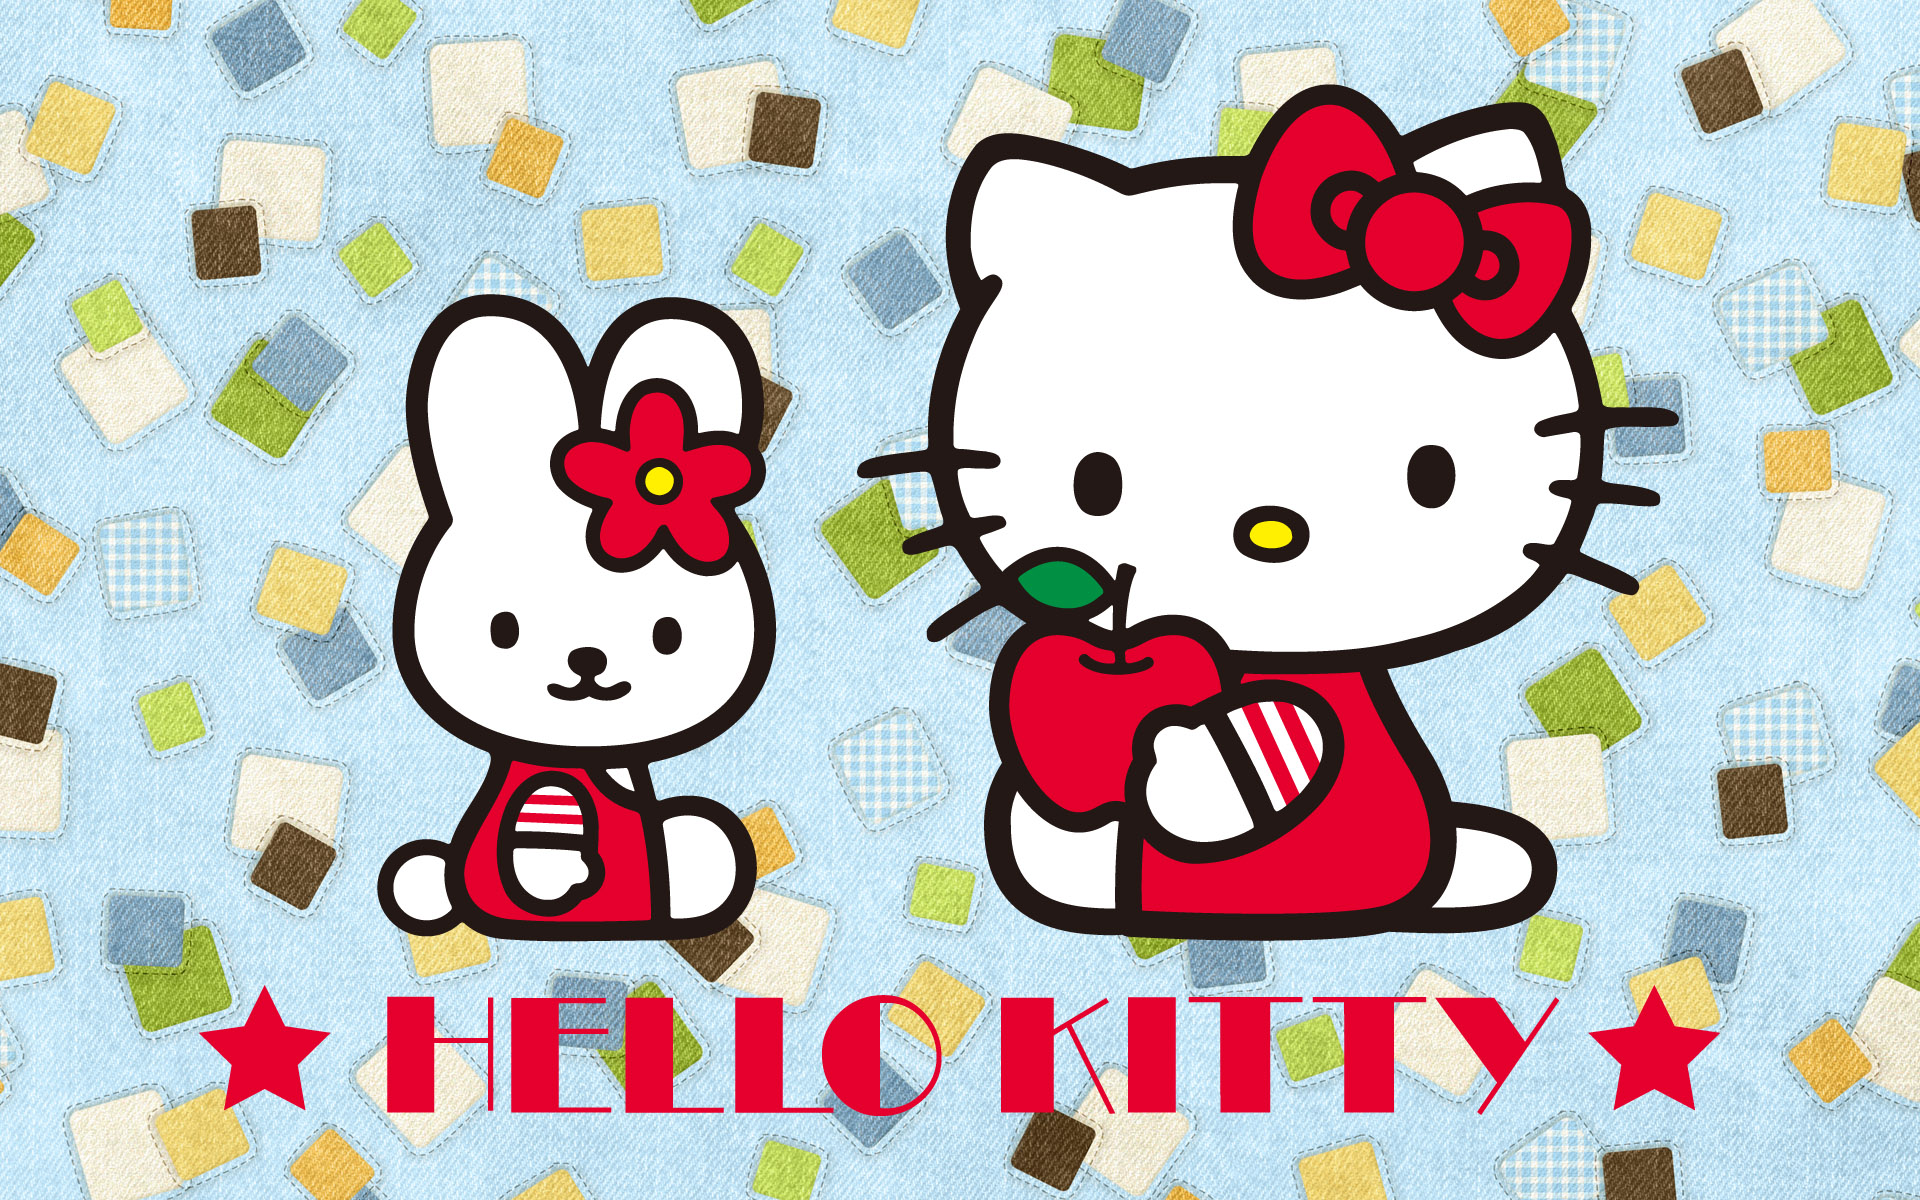 Hello Kitty Widescreen Wallpaper HD